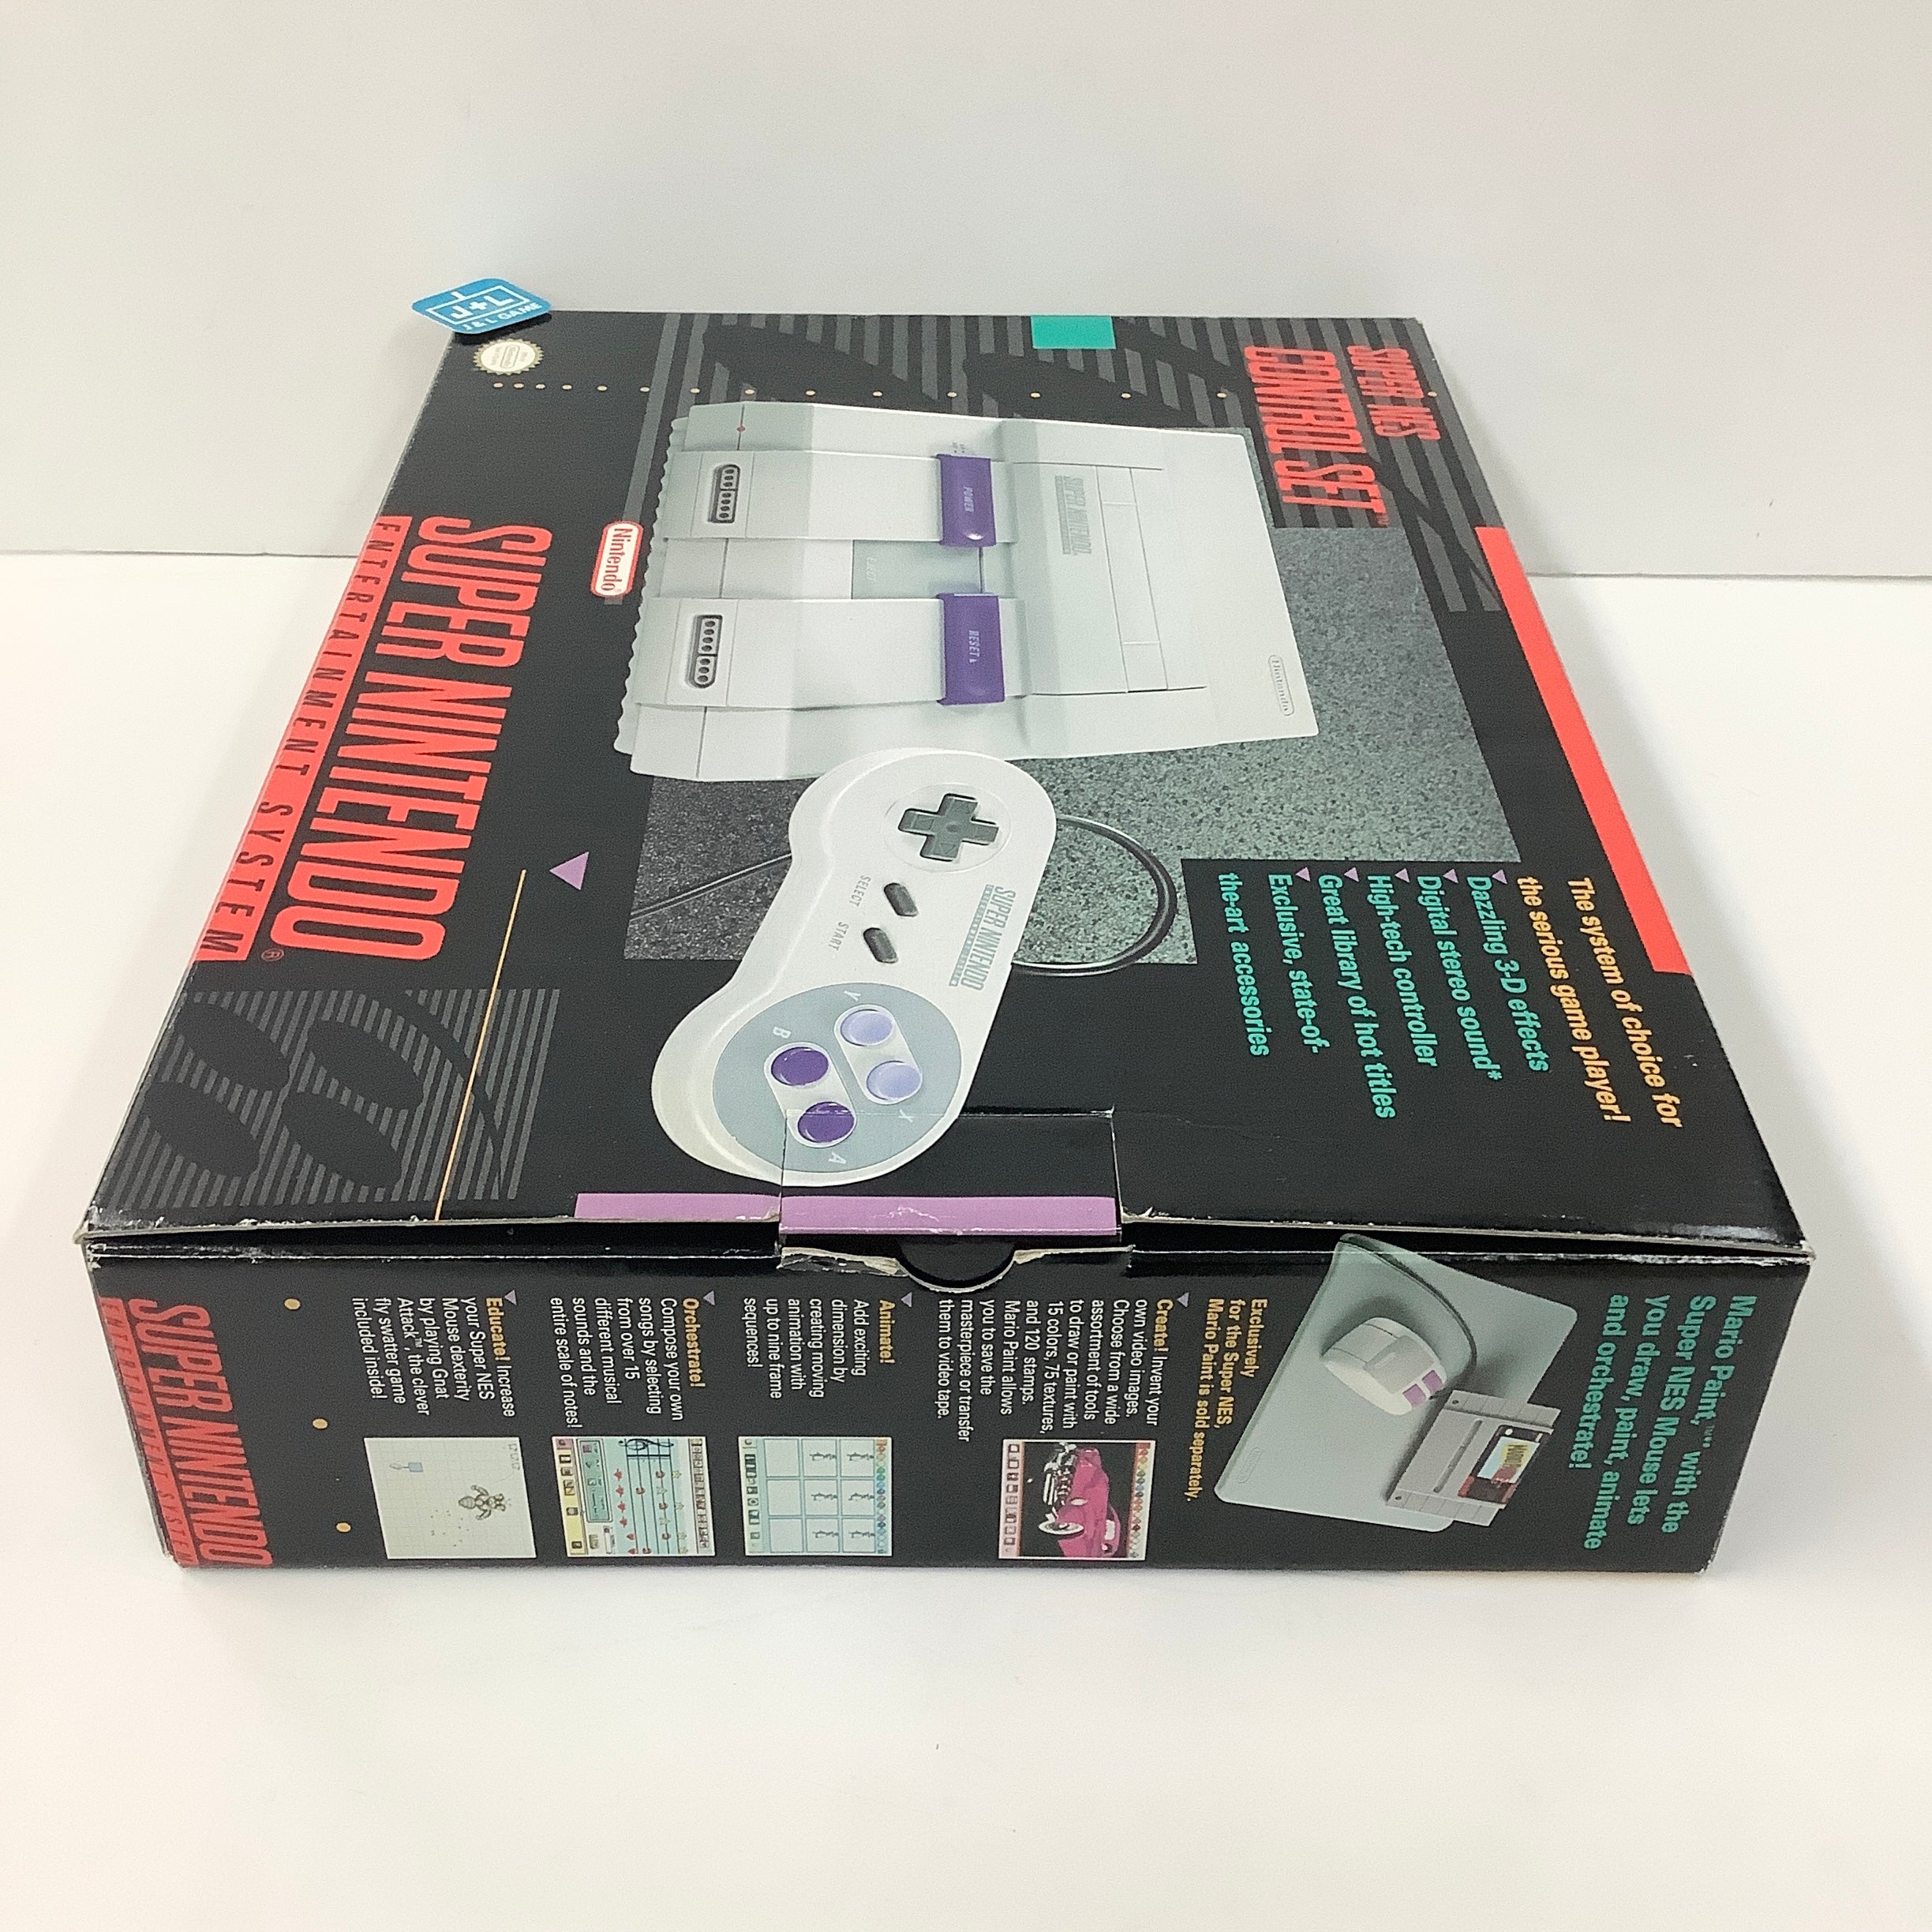 Nintendo Super Nintendo Console - (SNES) Super Nintendo [Pre-Owned] Consoles Nintendo   